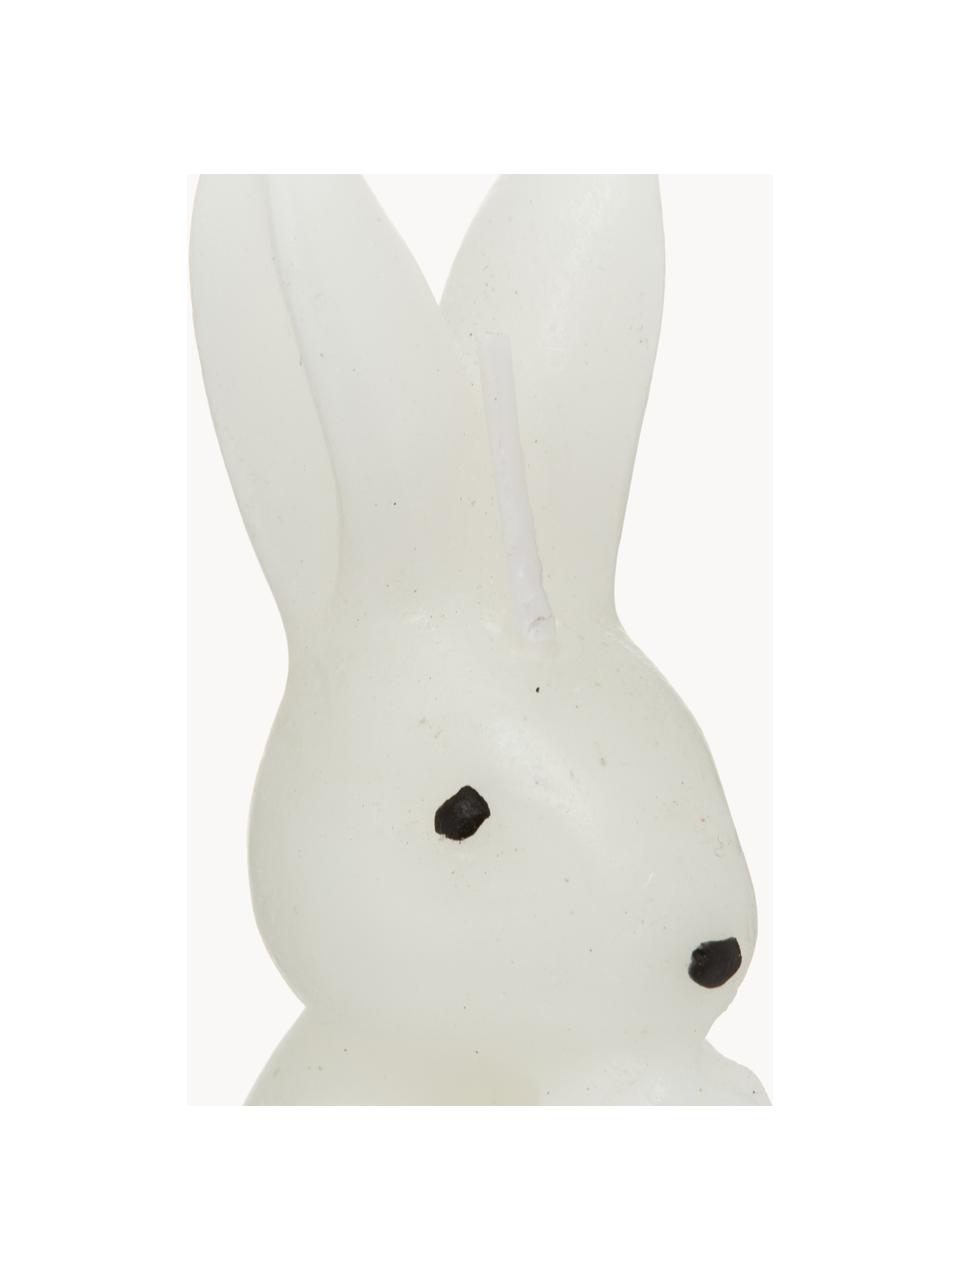 Vela decorativa Bunny, Cera, Blanco, dorado, Ø 6 x Al 13 cm